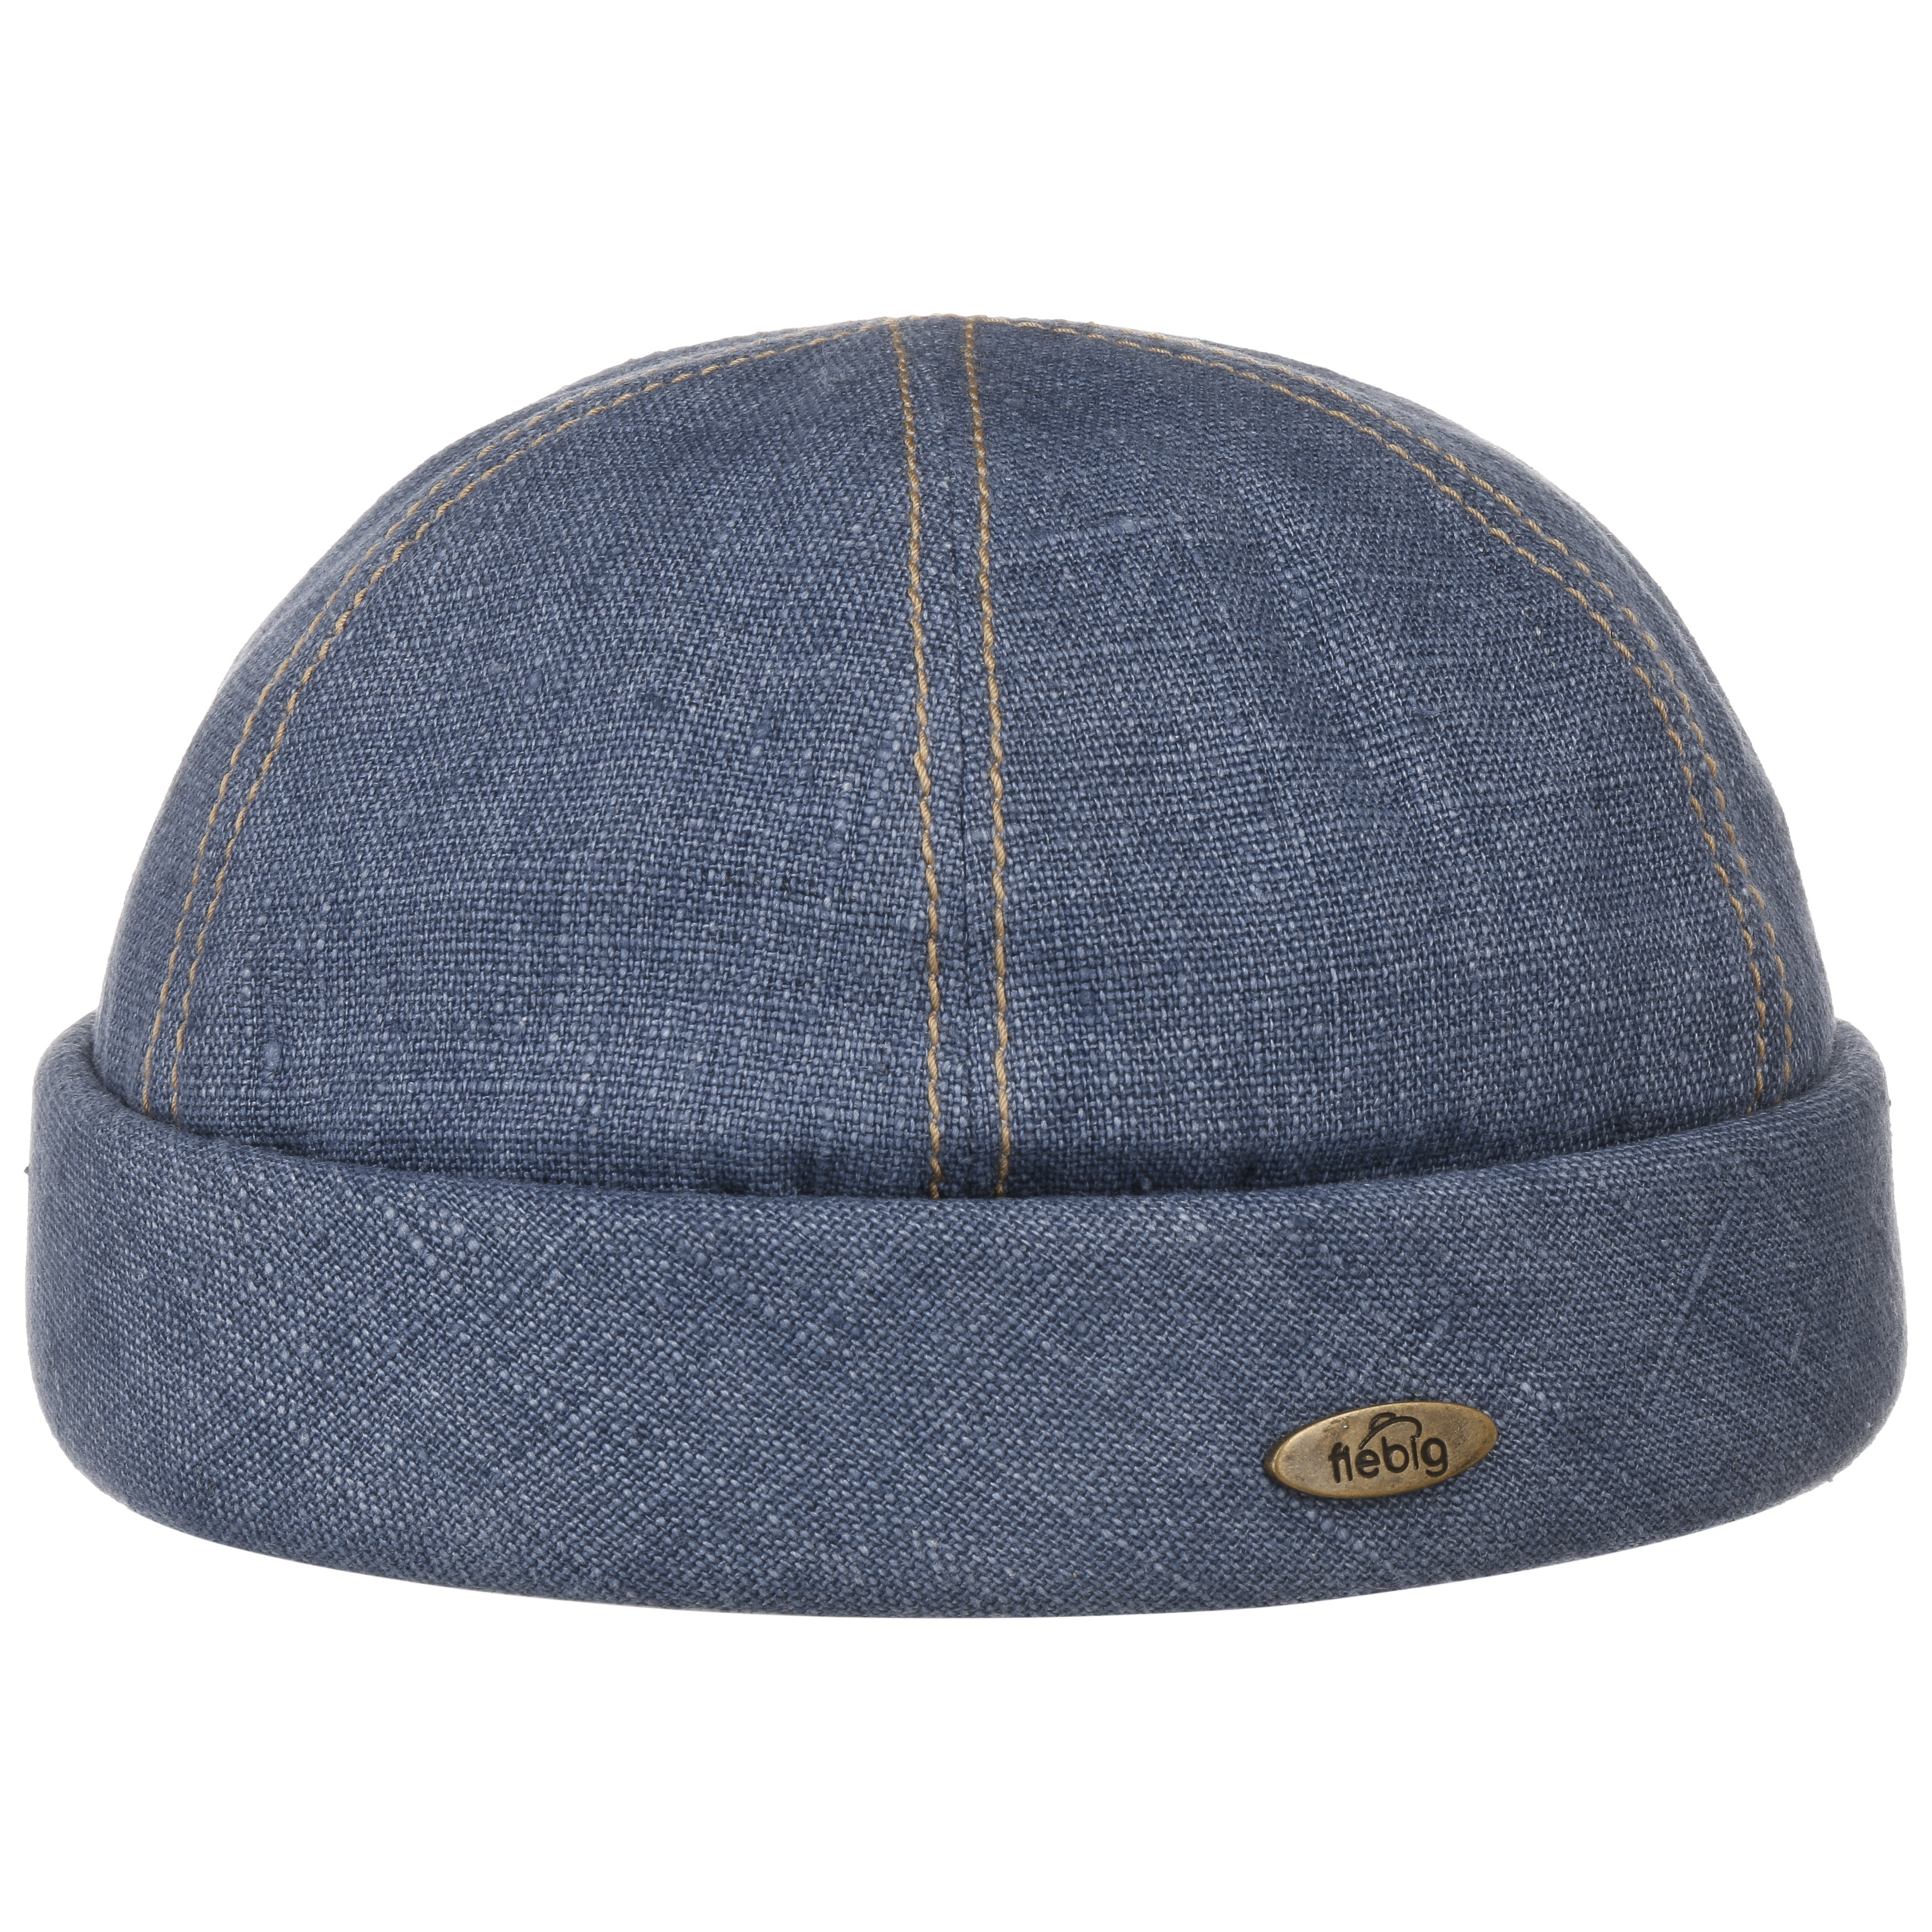 Linen Docker 42,95 € - Hat